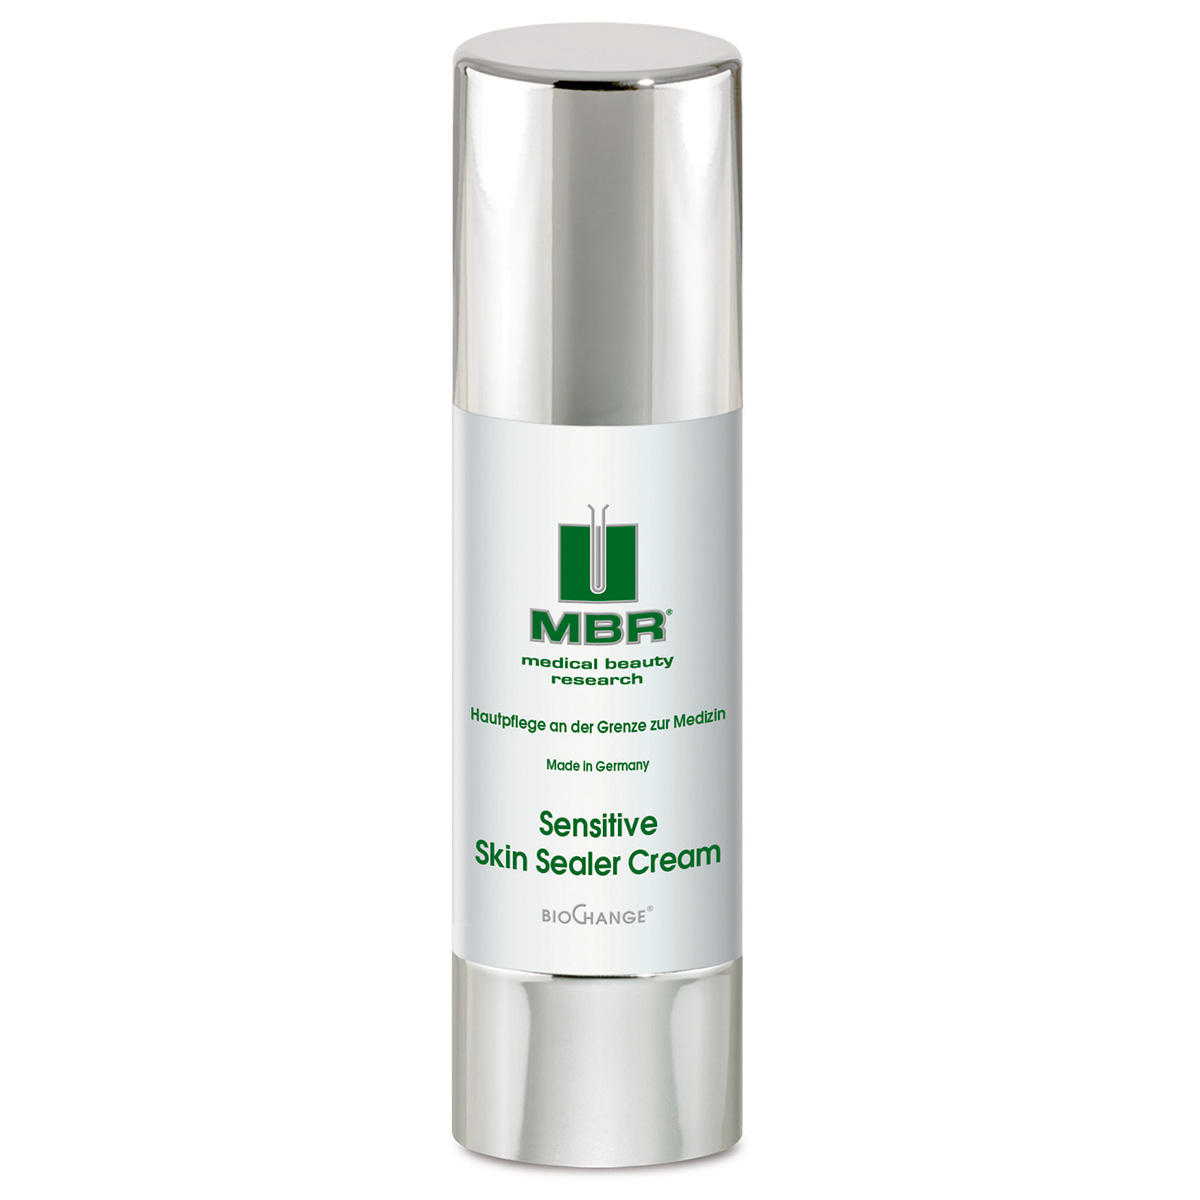 MBR Medical Beauty Research BioChange Sensitive Skin Sealer Cream 50 ml - 1